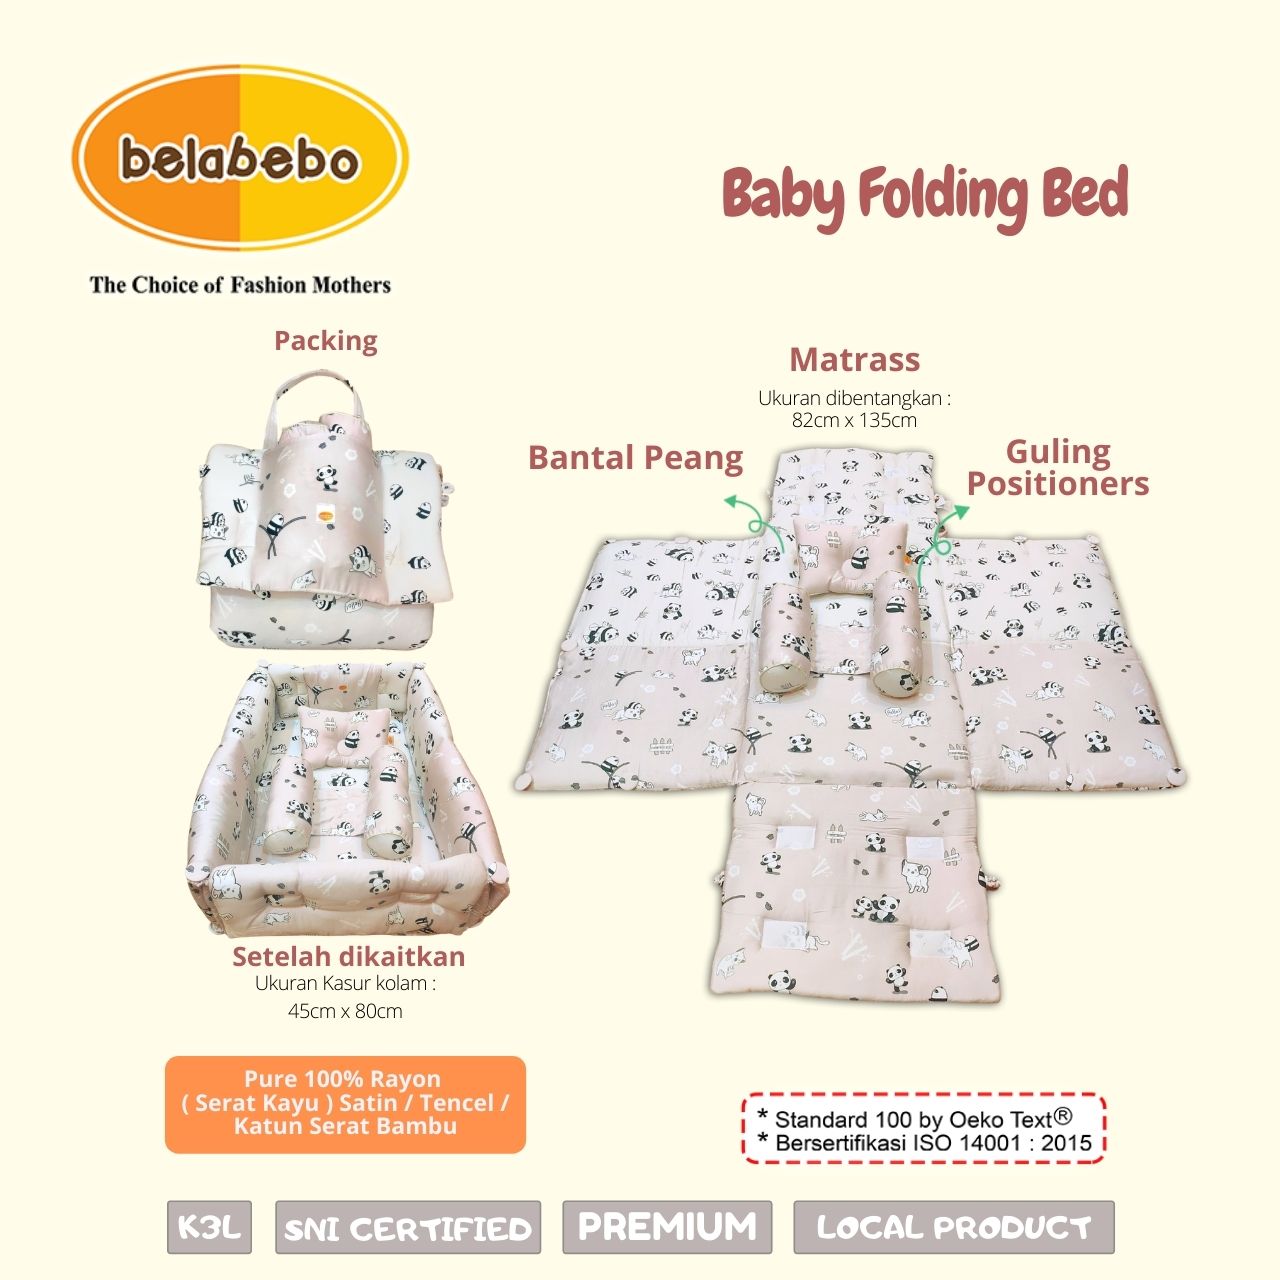 Baby Folding Bed Ukuran Belabebo